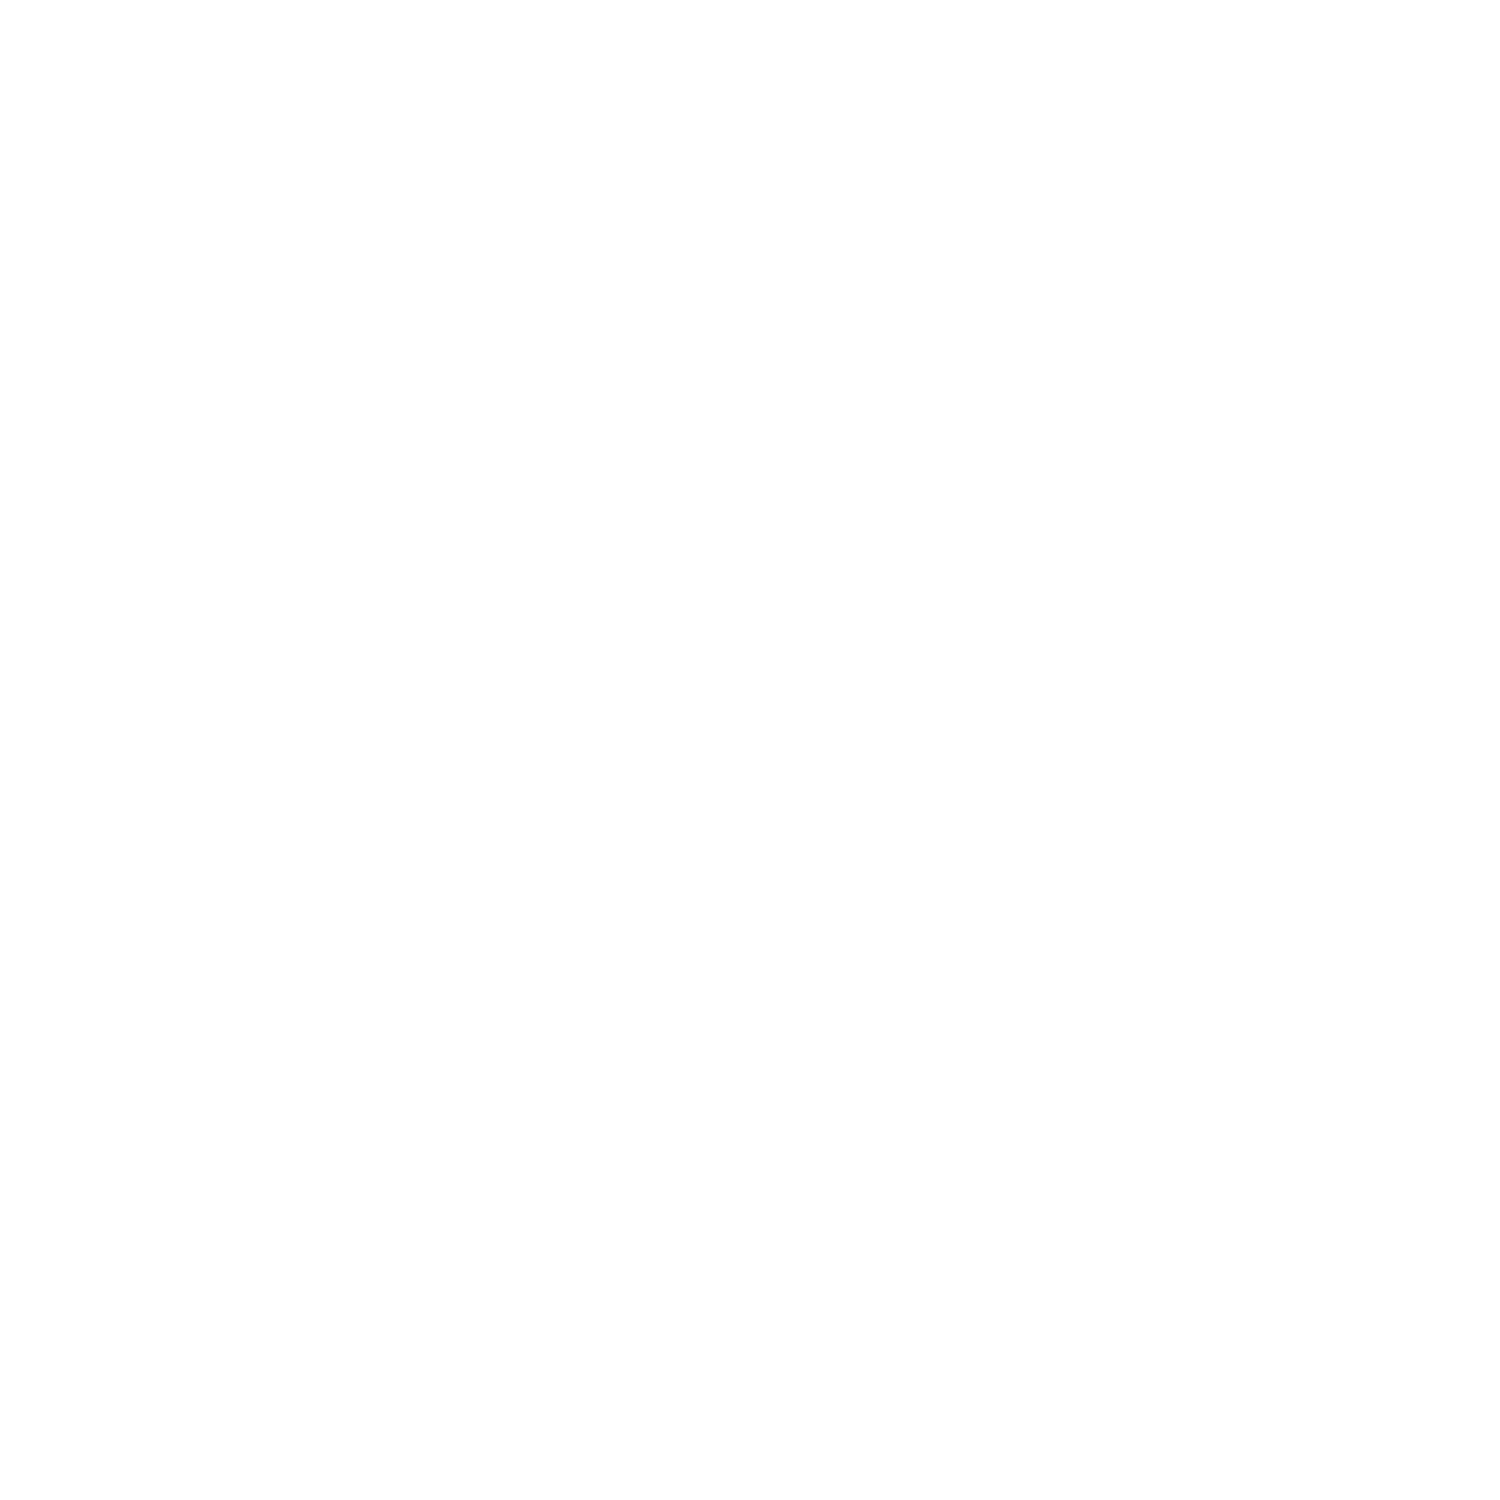 Embellish Kickboxing Academy